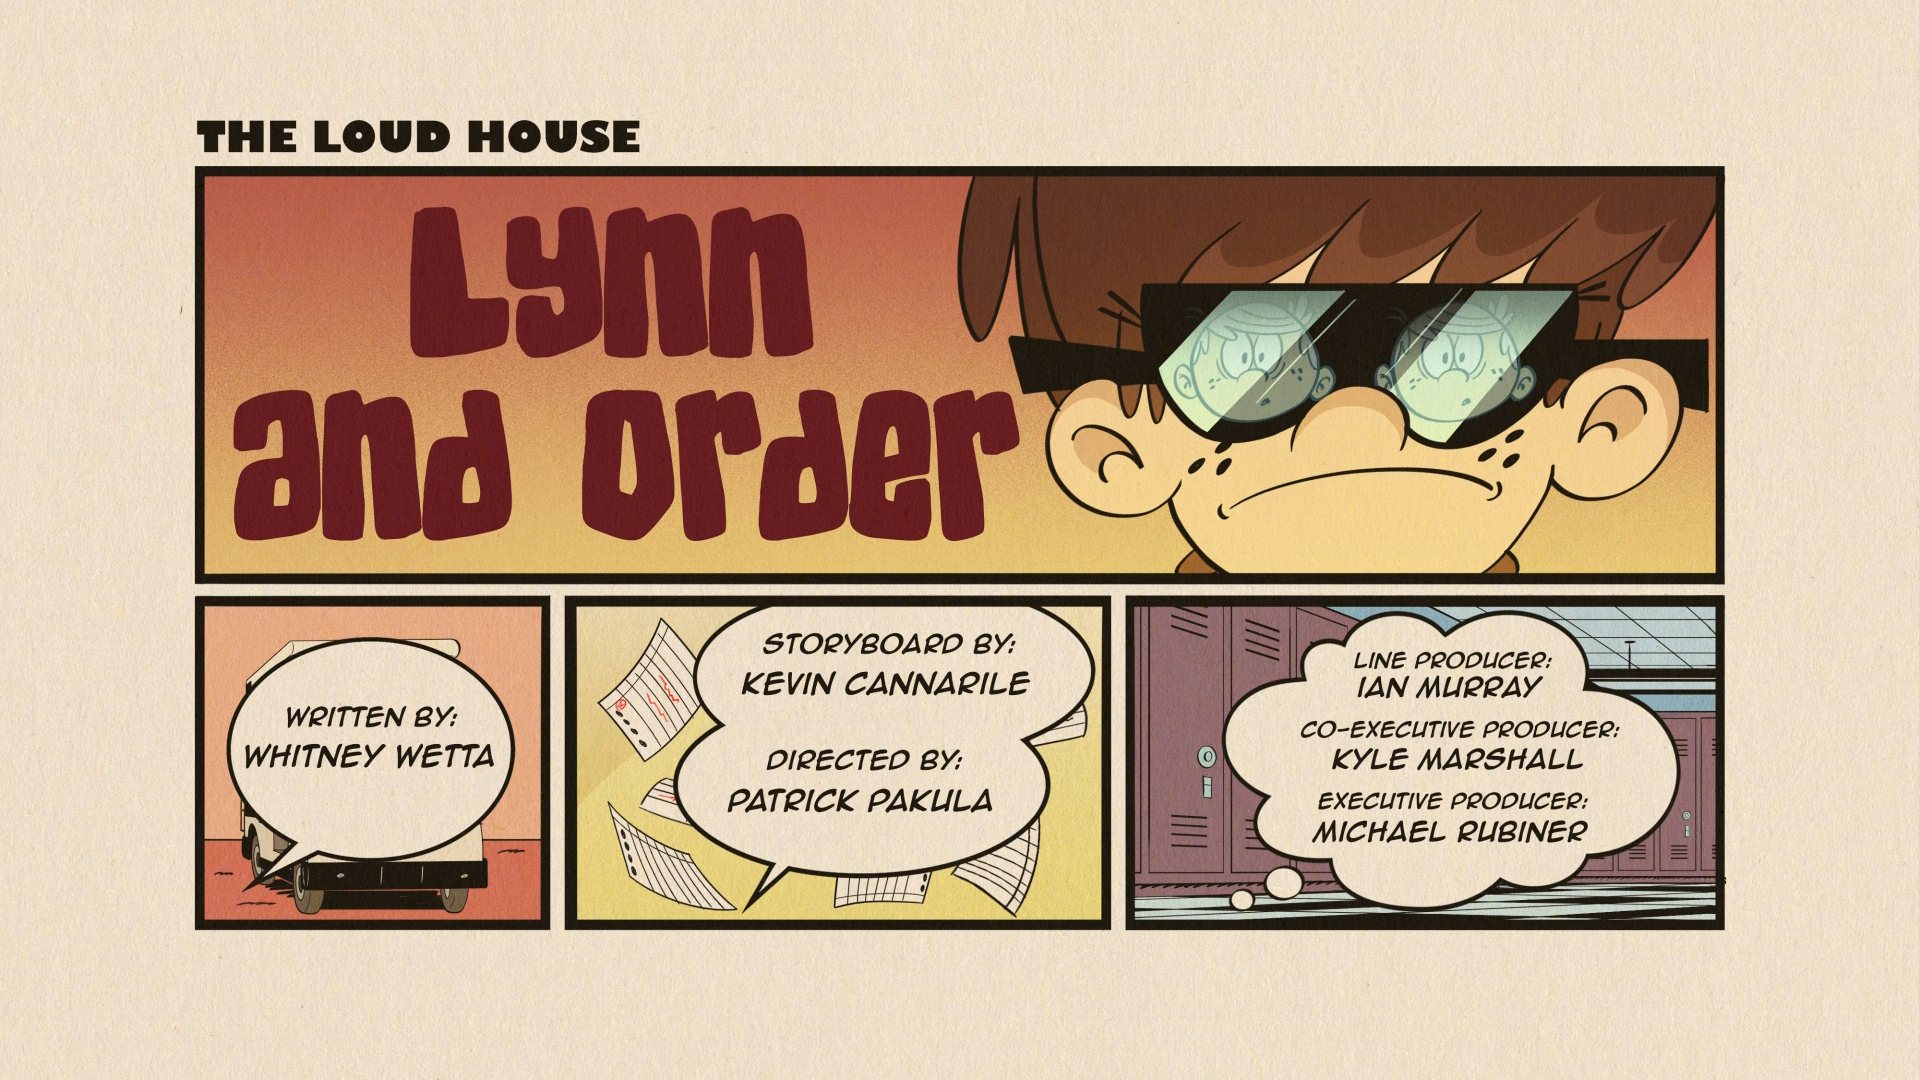 Lynn and Order